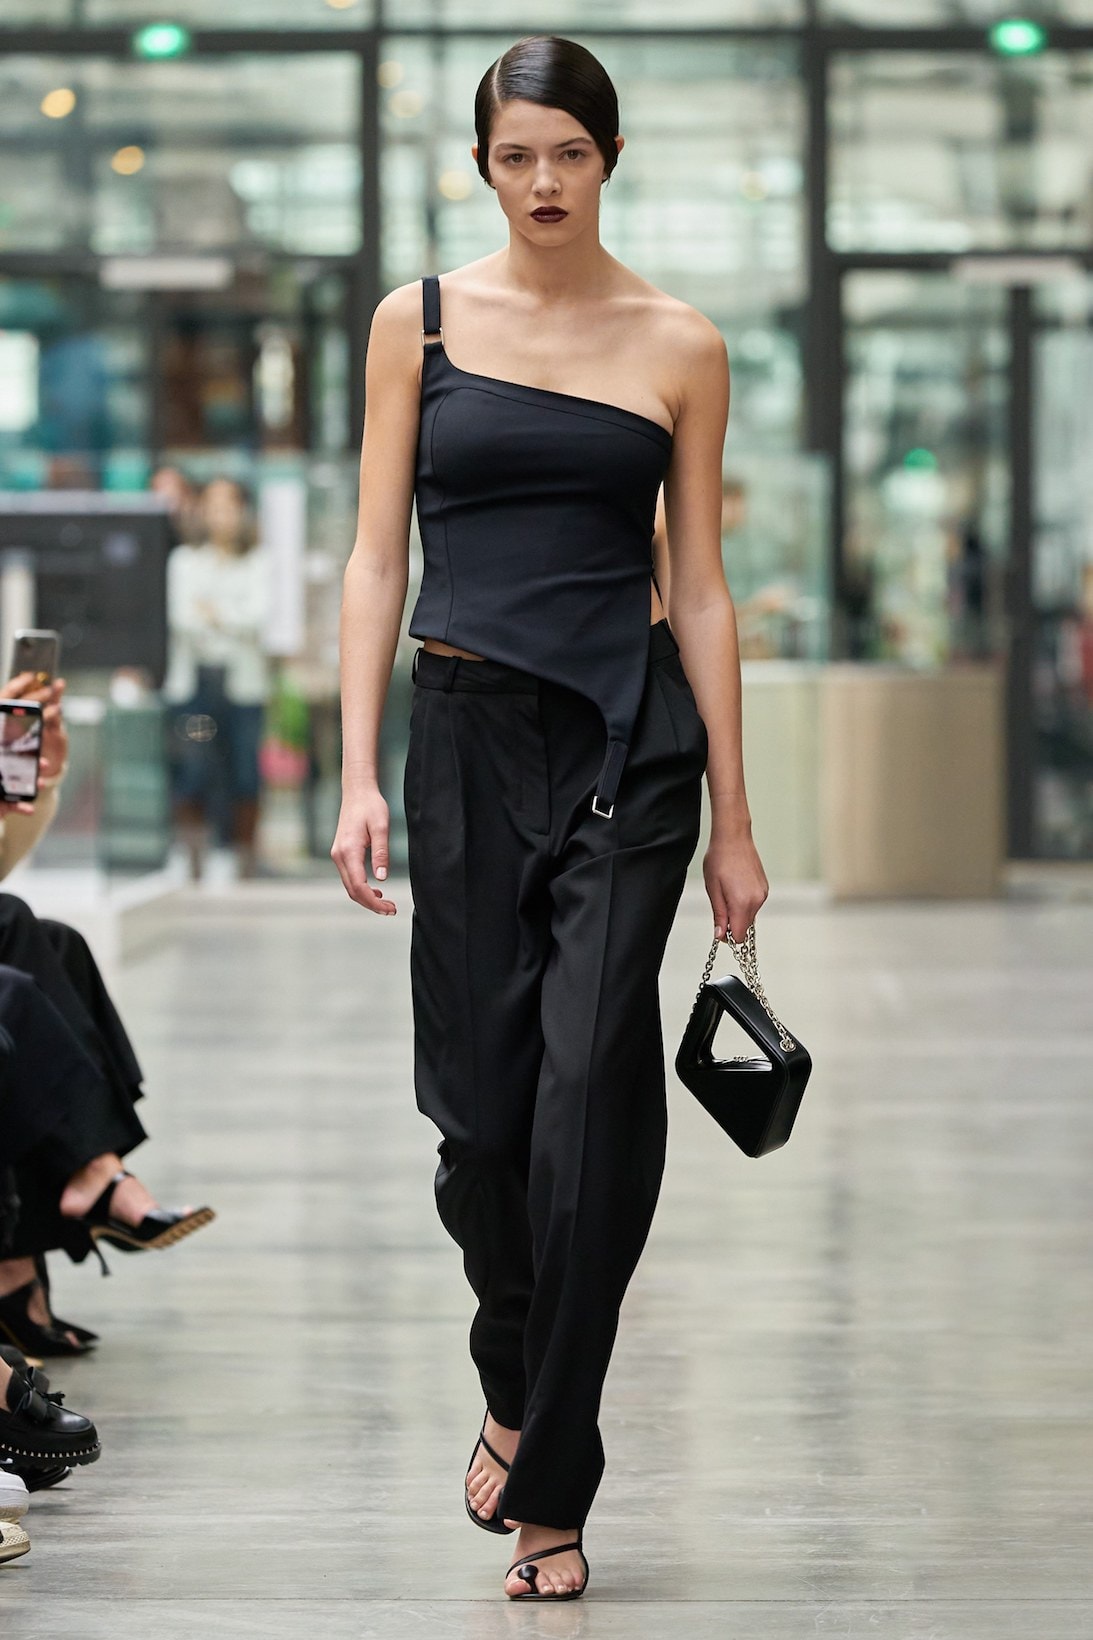 coperni sebastien meyer arnaud vaillant paris fashion week fall winter collection one shoulder top black pants bag